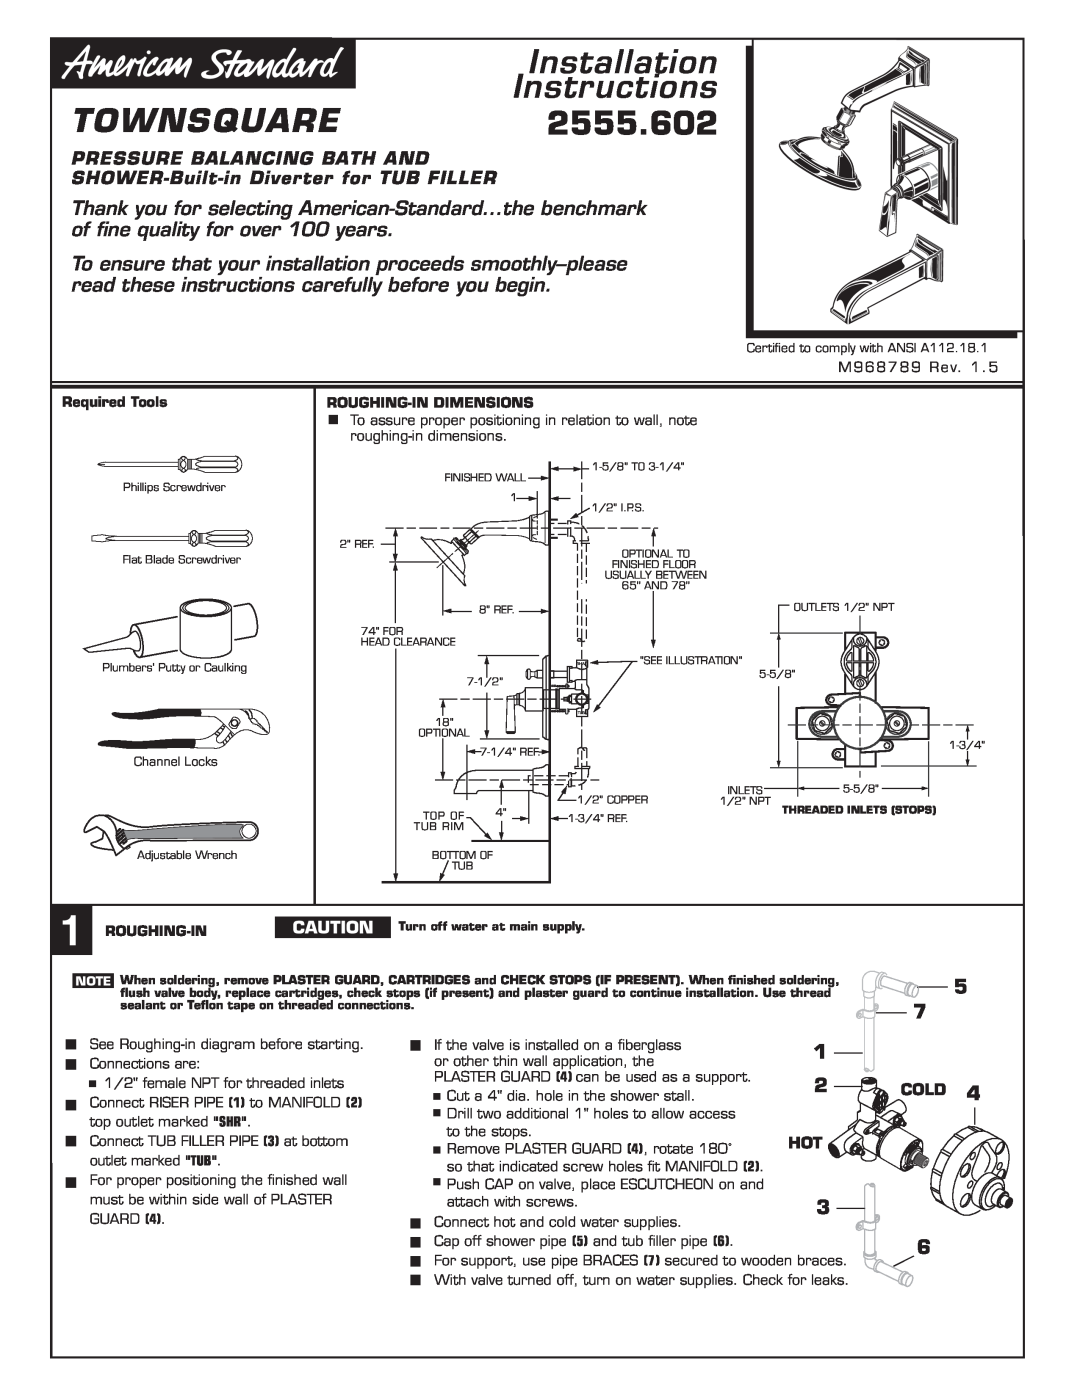 American Standard installation instructions Installation Instructions, TOWNSQUARE2555.602, EverClean Finish 